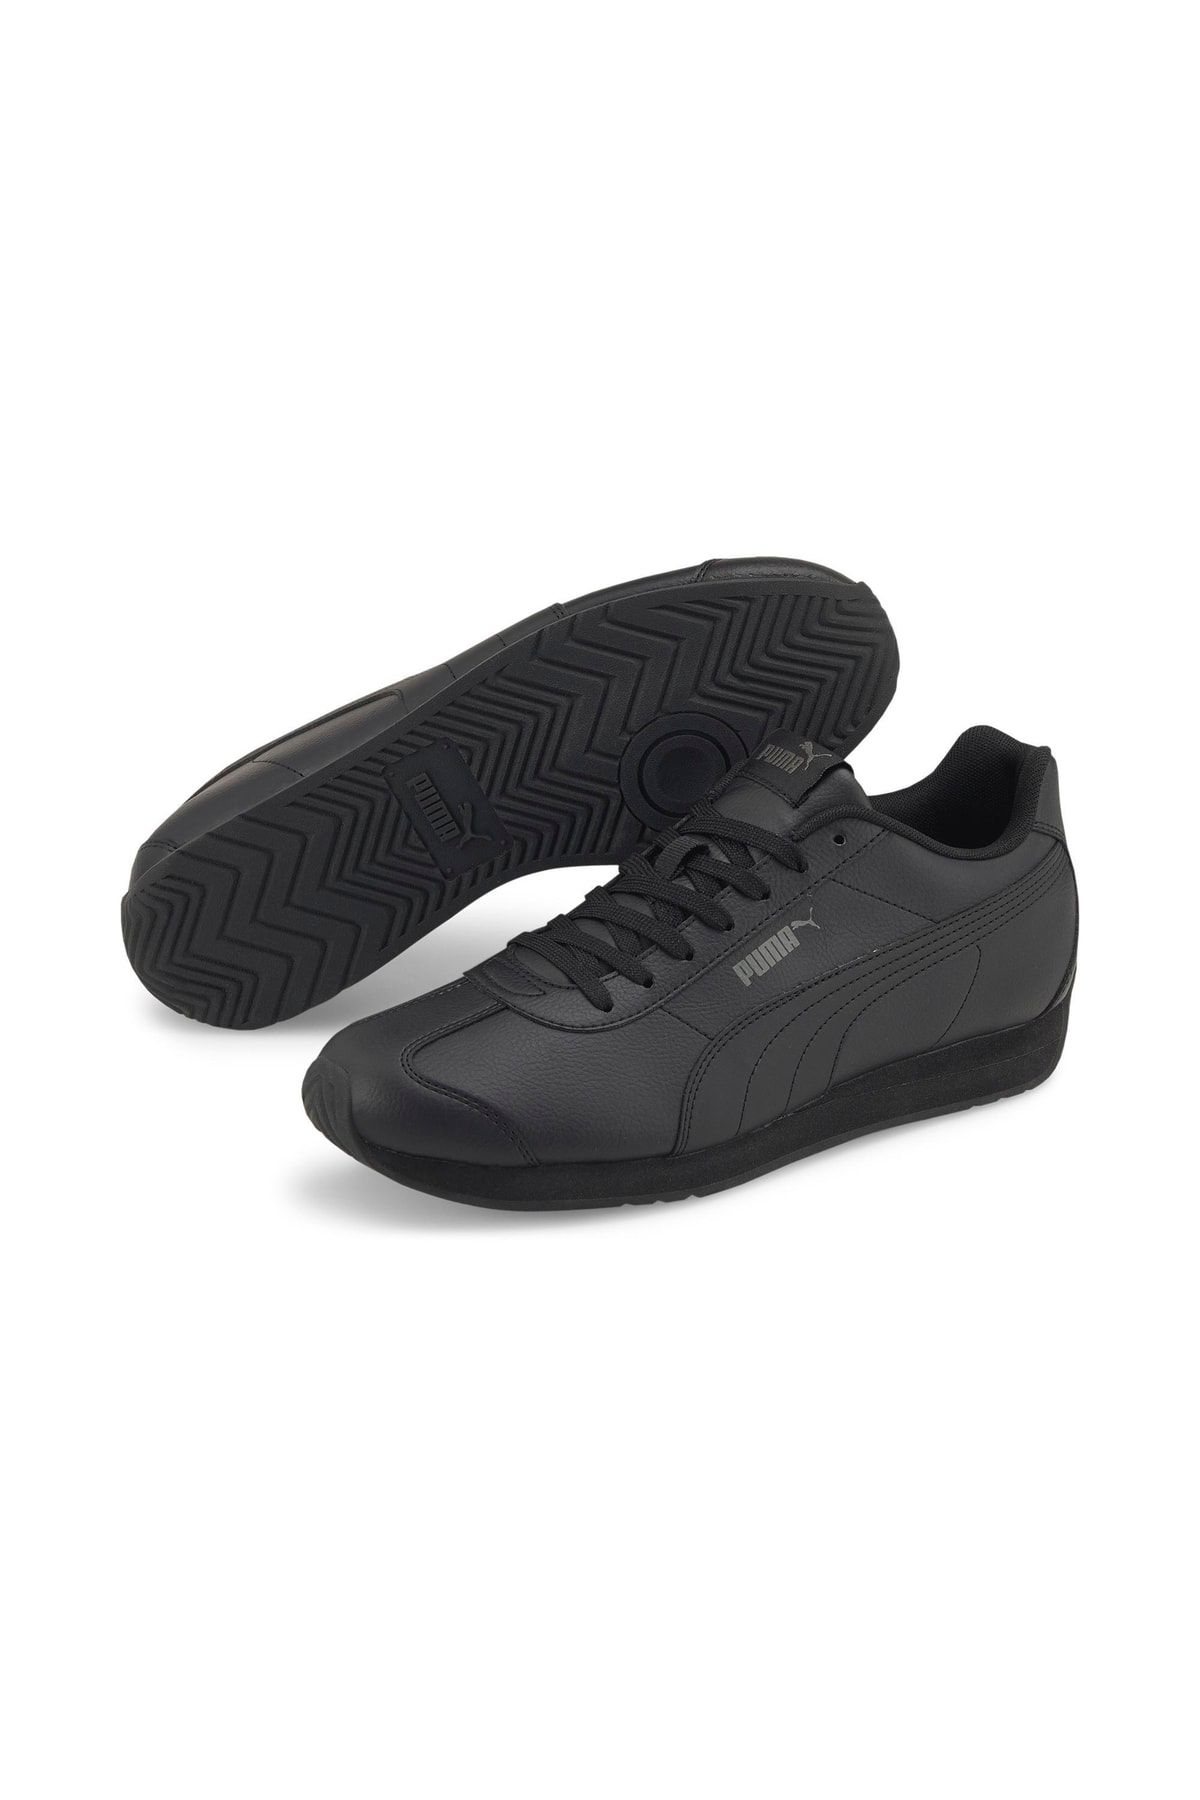 Puma Turin 3 - Siyah Unisex Spor Ayakkabı